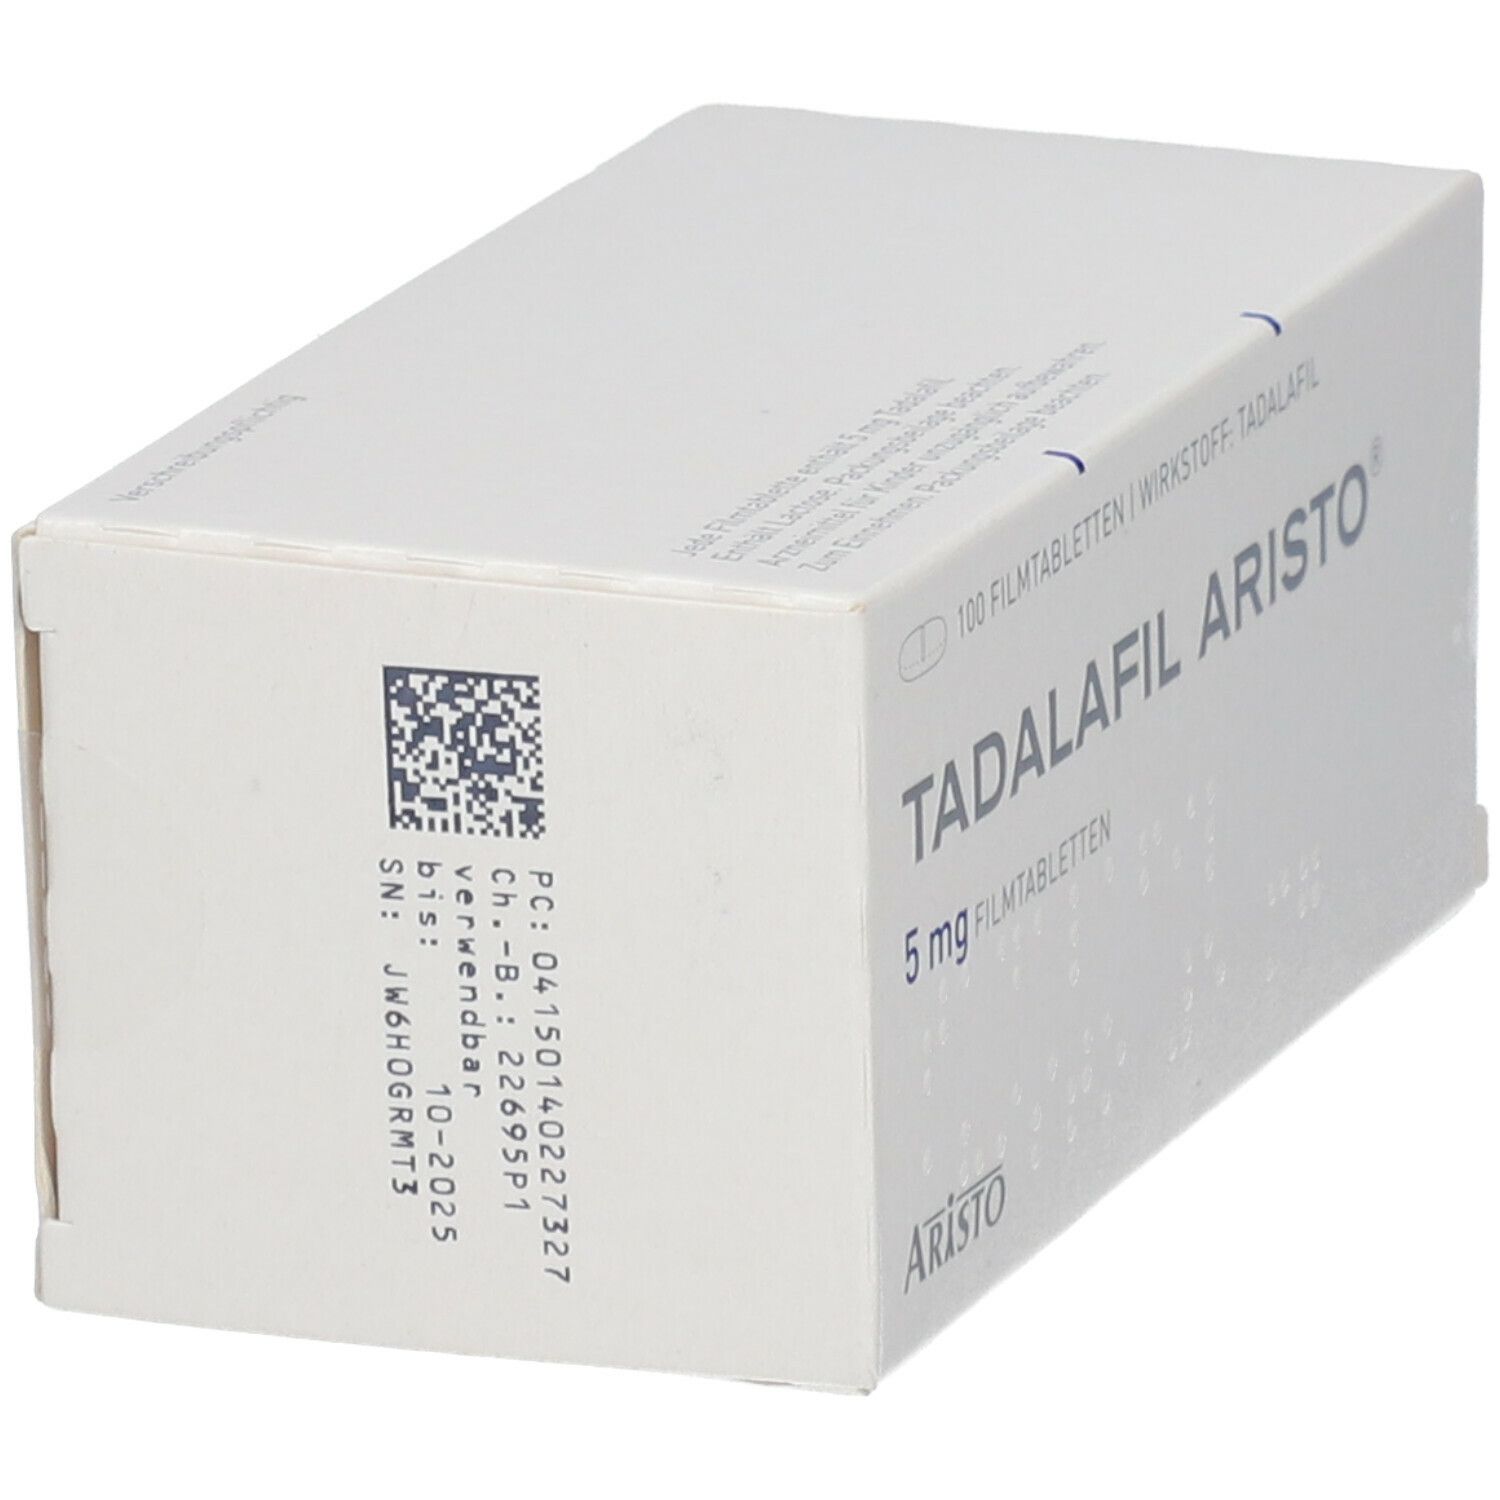 TADALAFIL Aristo® 5 mg